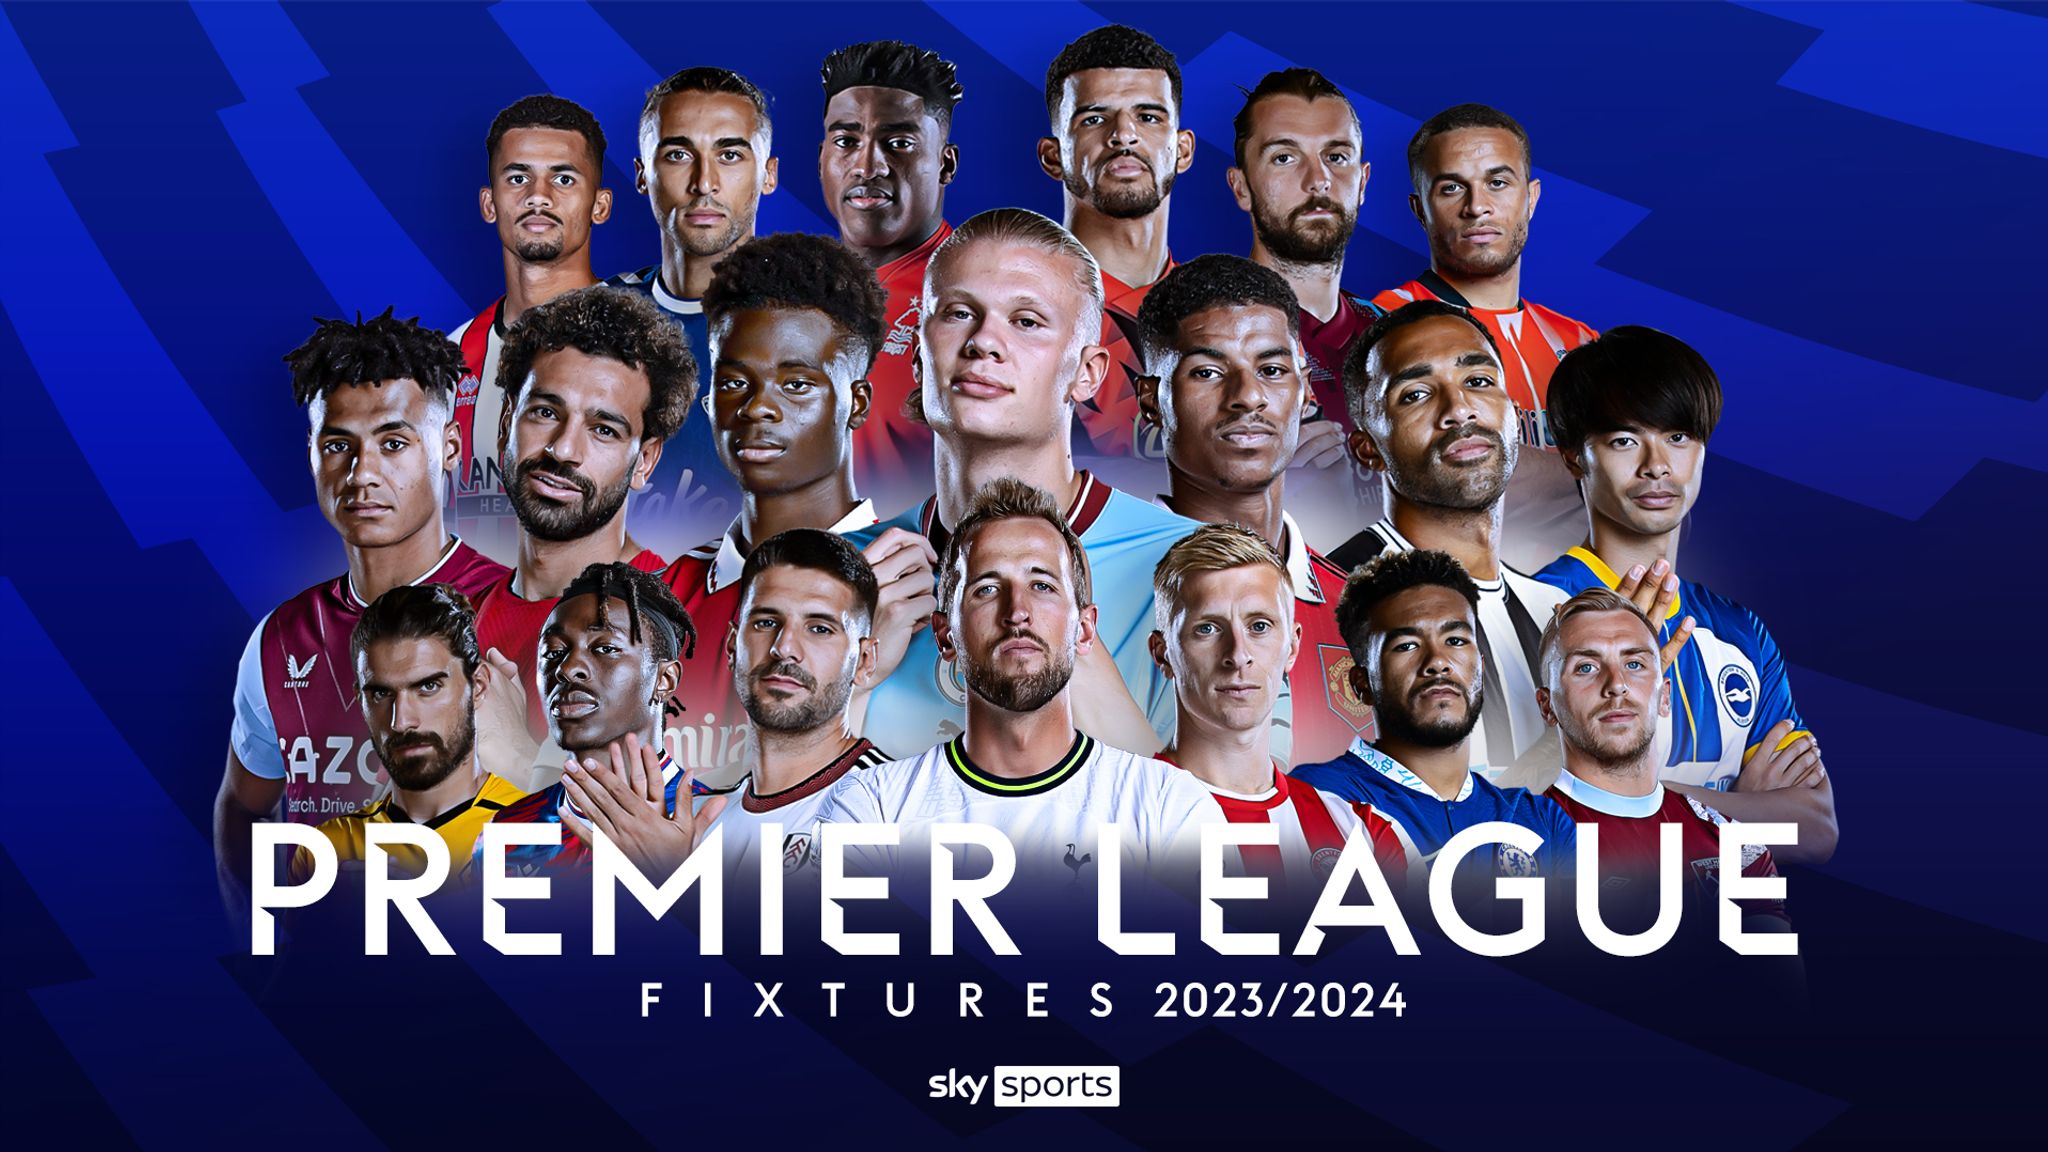 Newcastle United: Premier League 2022/23 fixtures and schedule